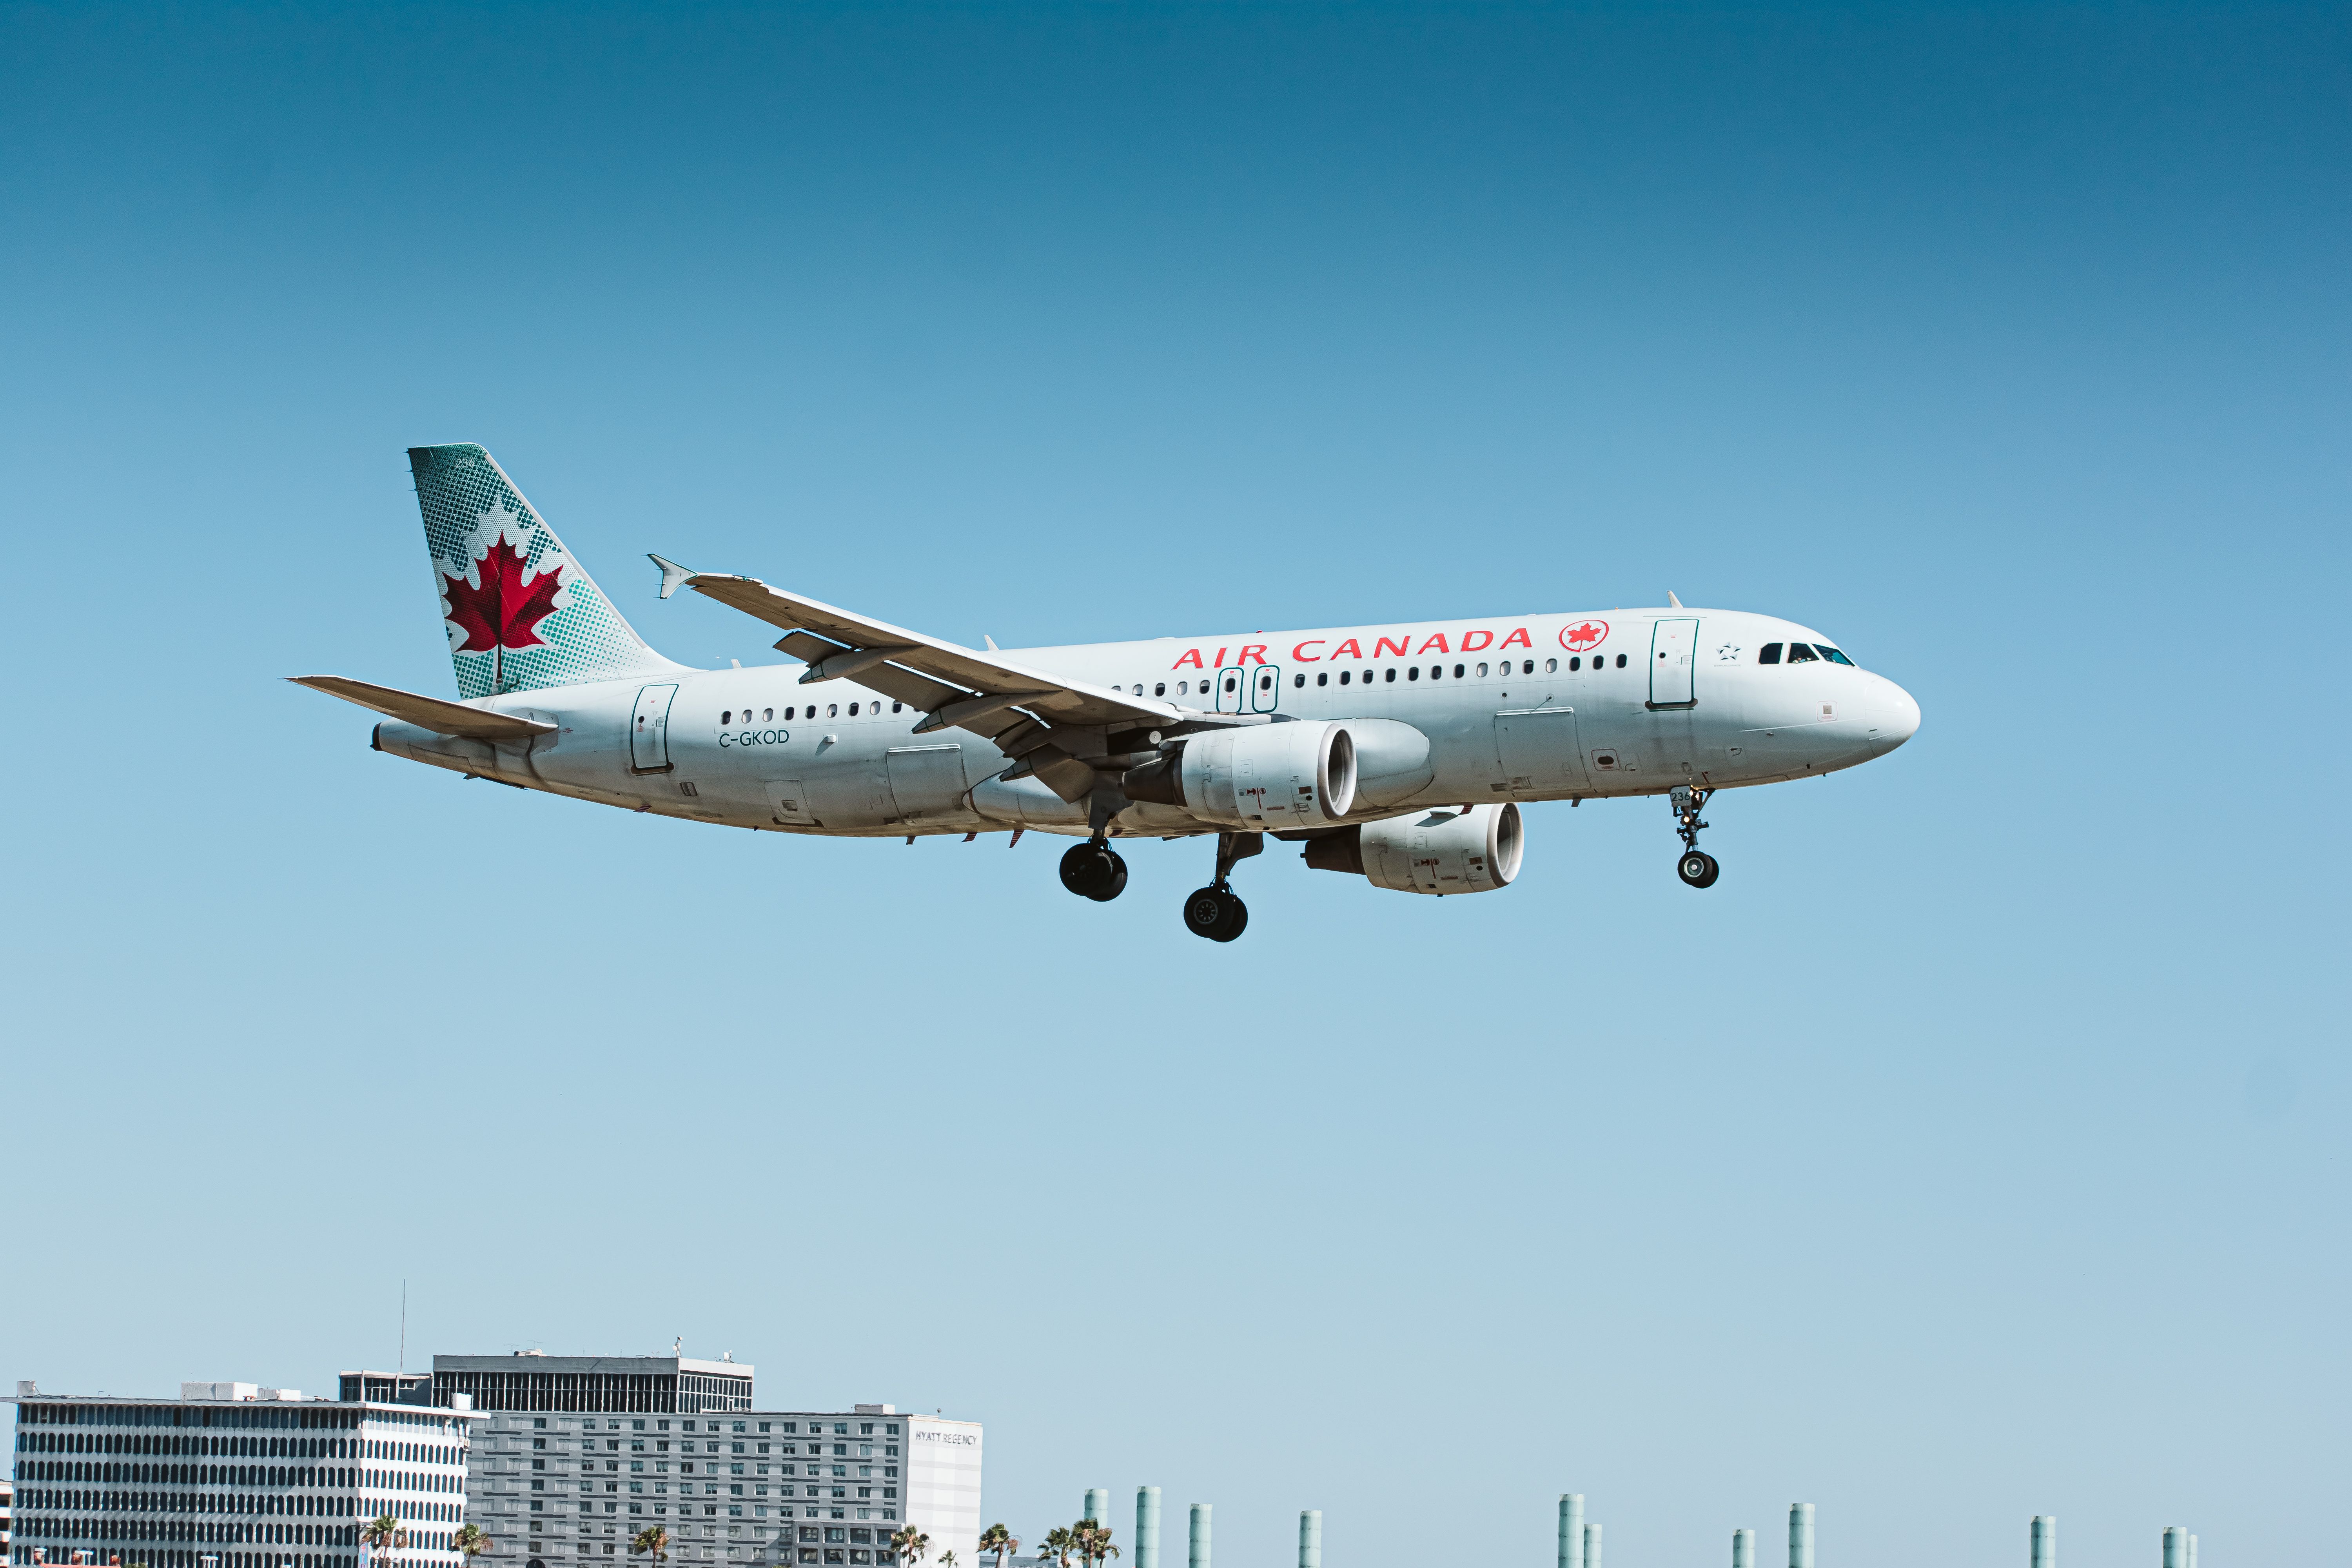 Air Canada Airbus A320 landing at LAX